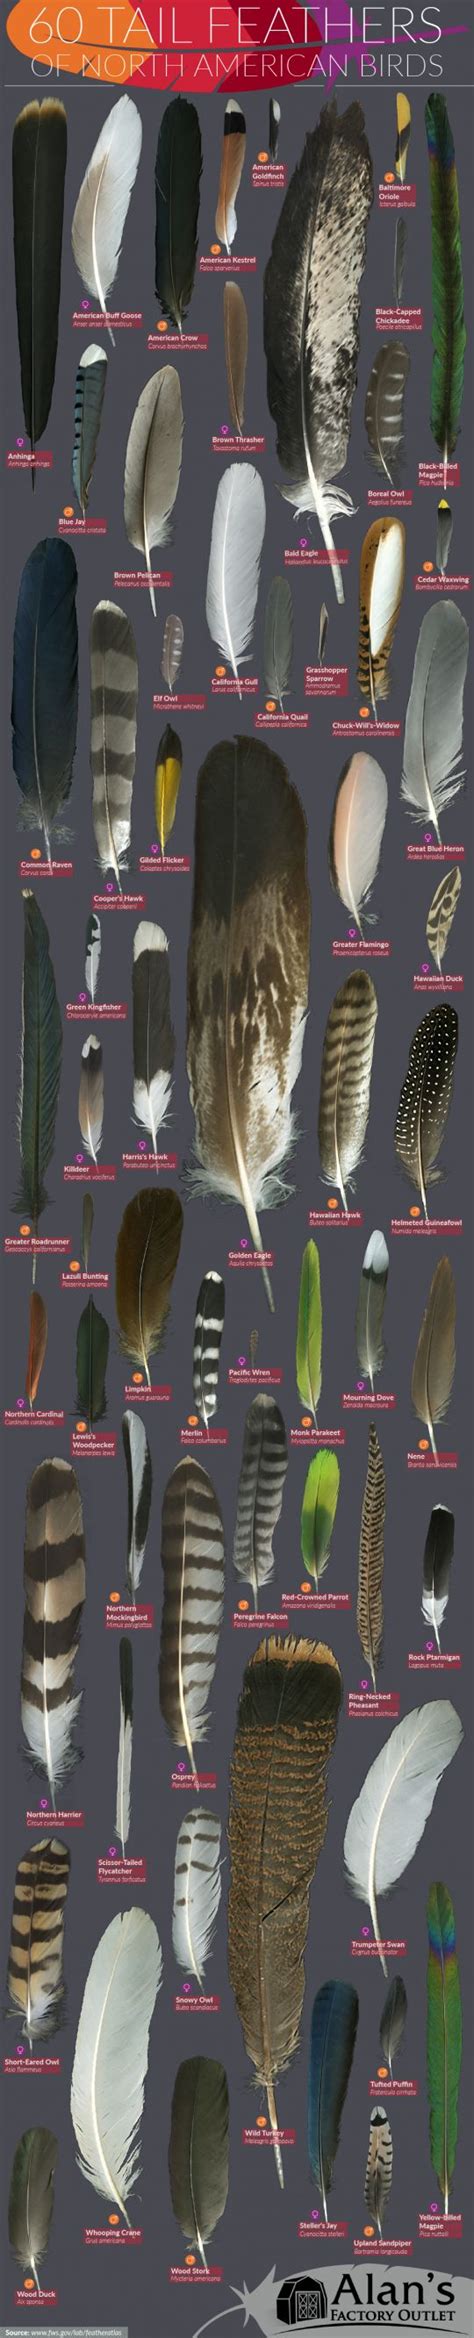 Unique Feather Traits for Species Identifi